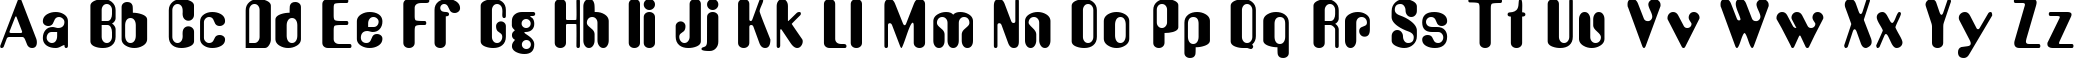 Пример написания английского алфавита шрифтом LidaDi